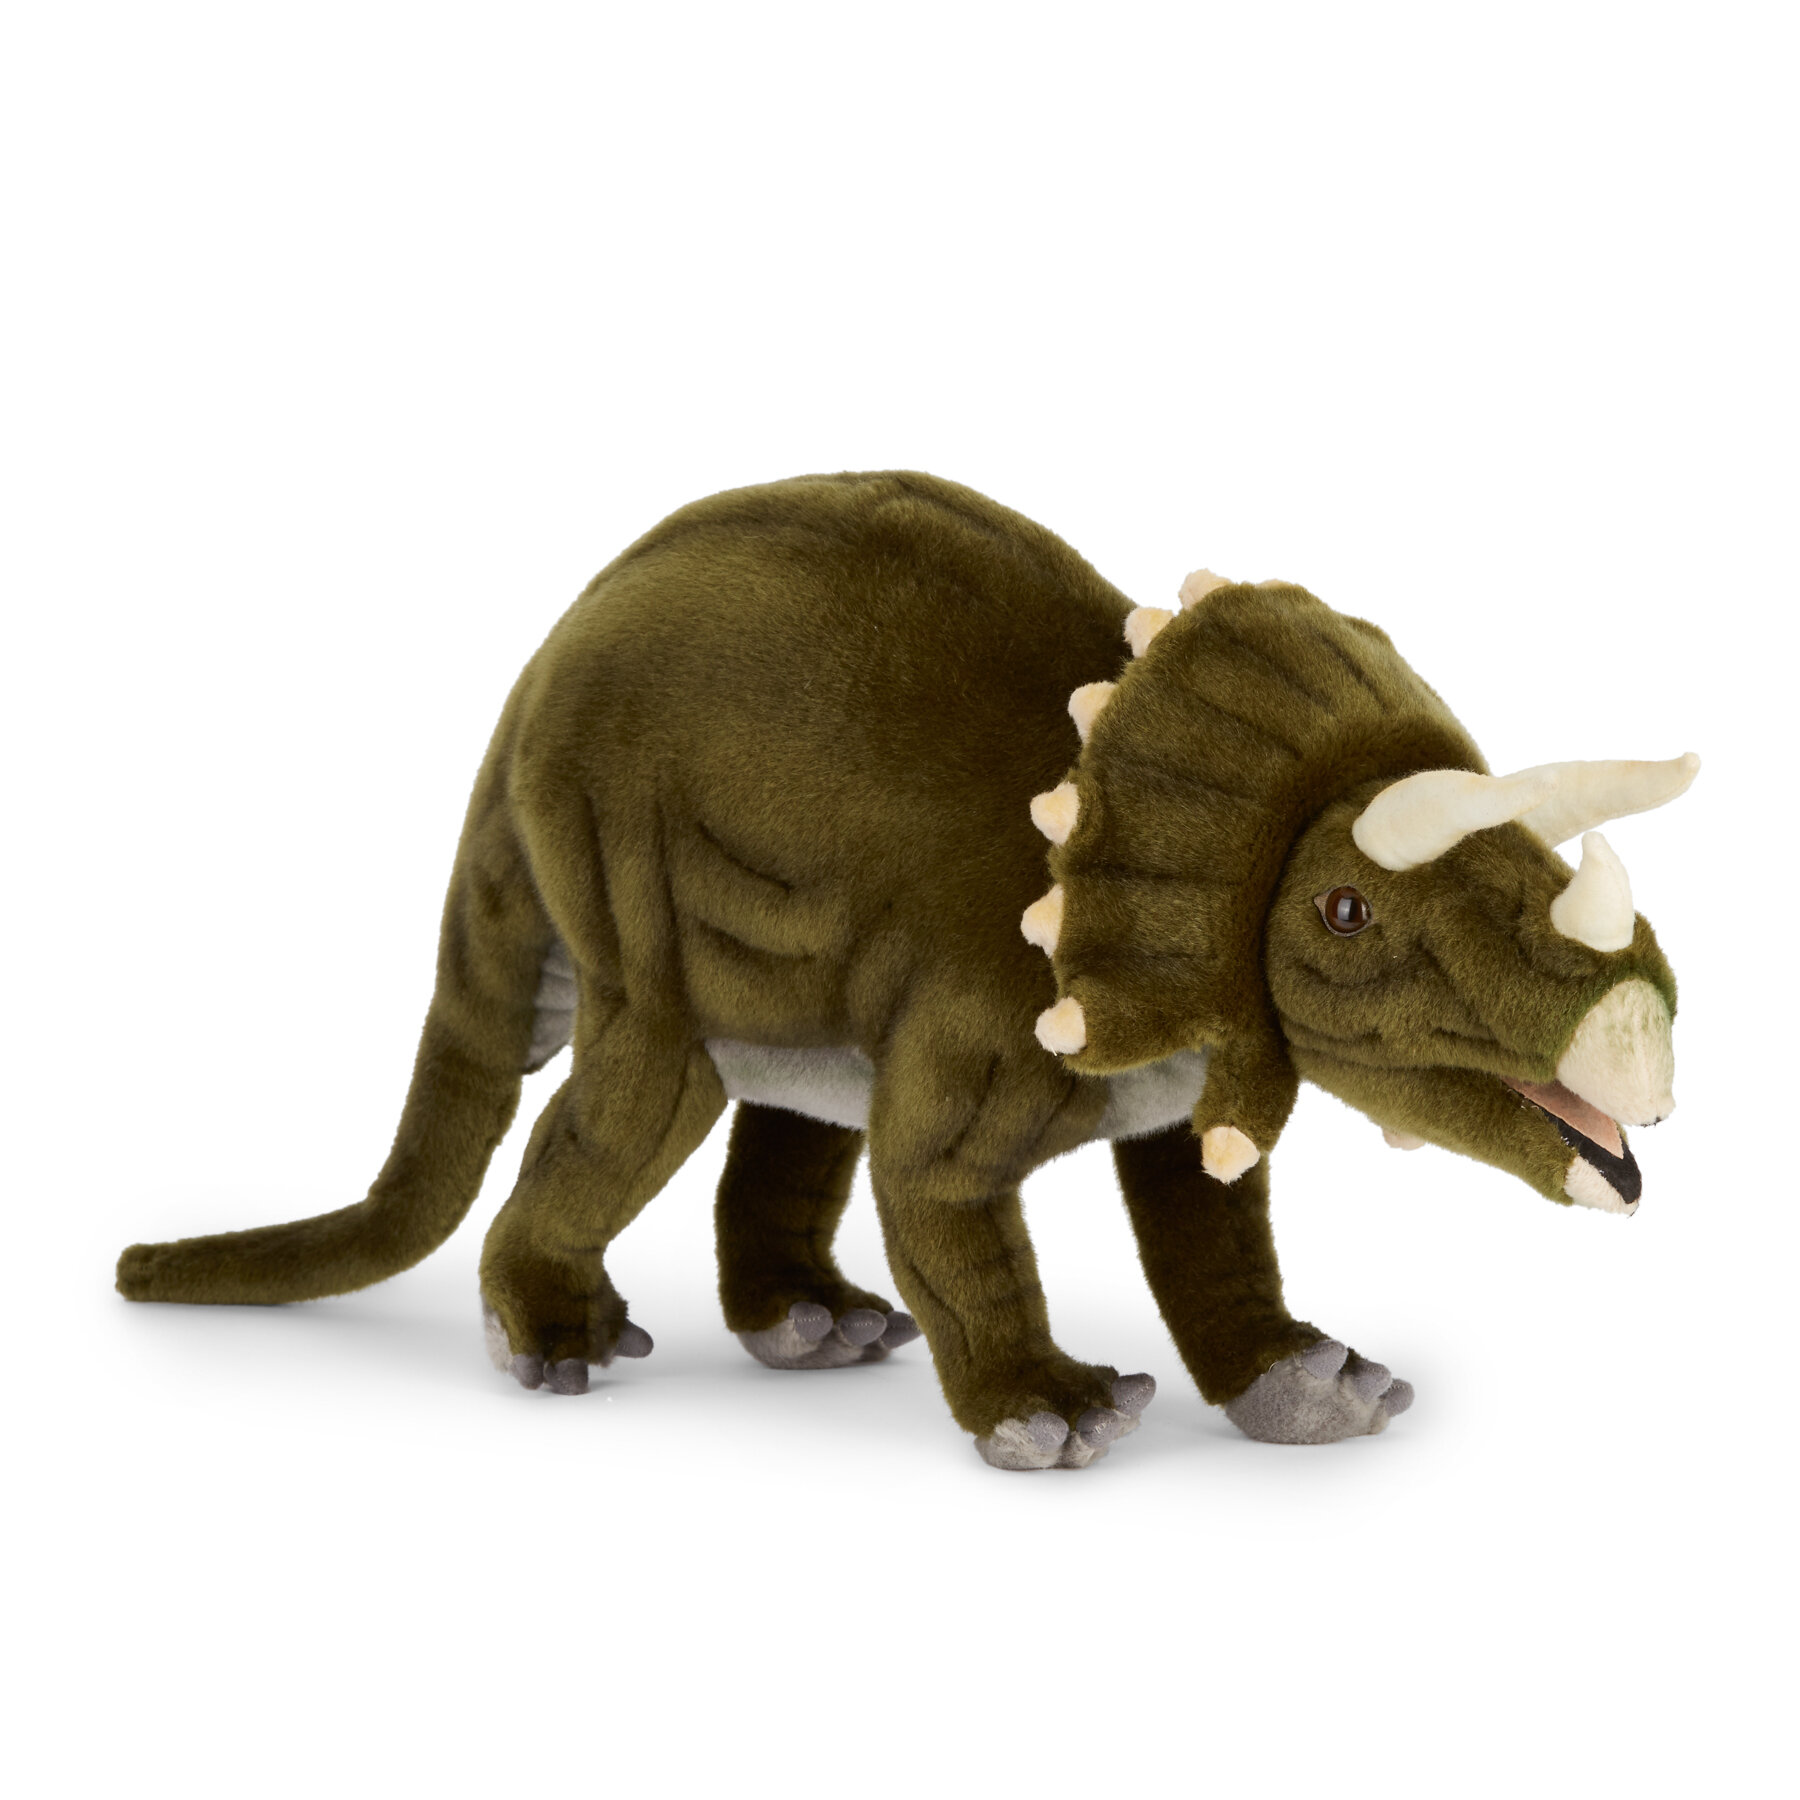 on-white-kids-toys-product-photo-example_stuffed-dinosaur